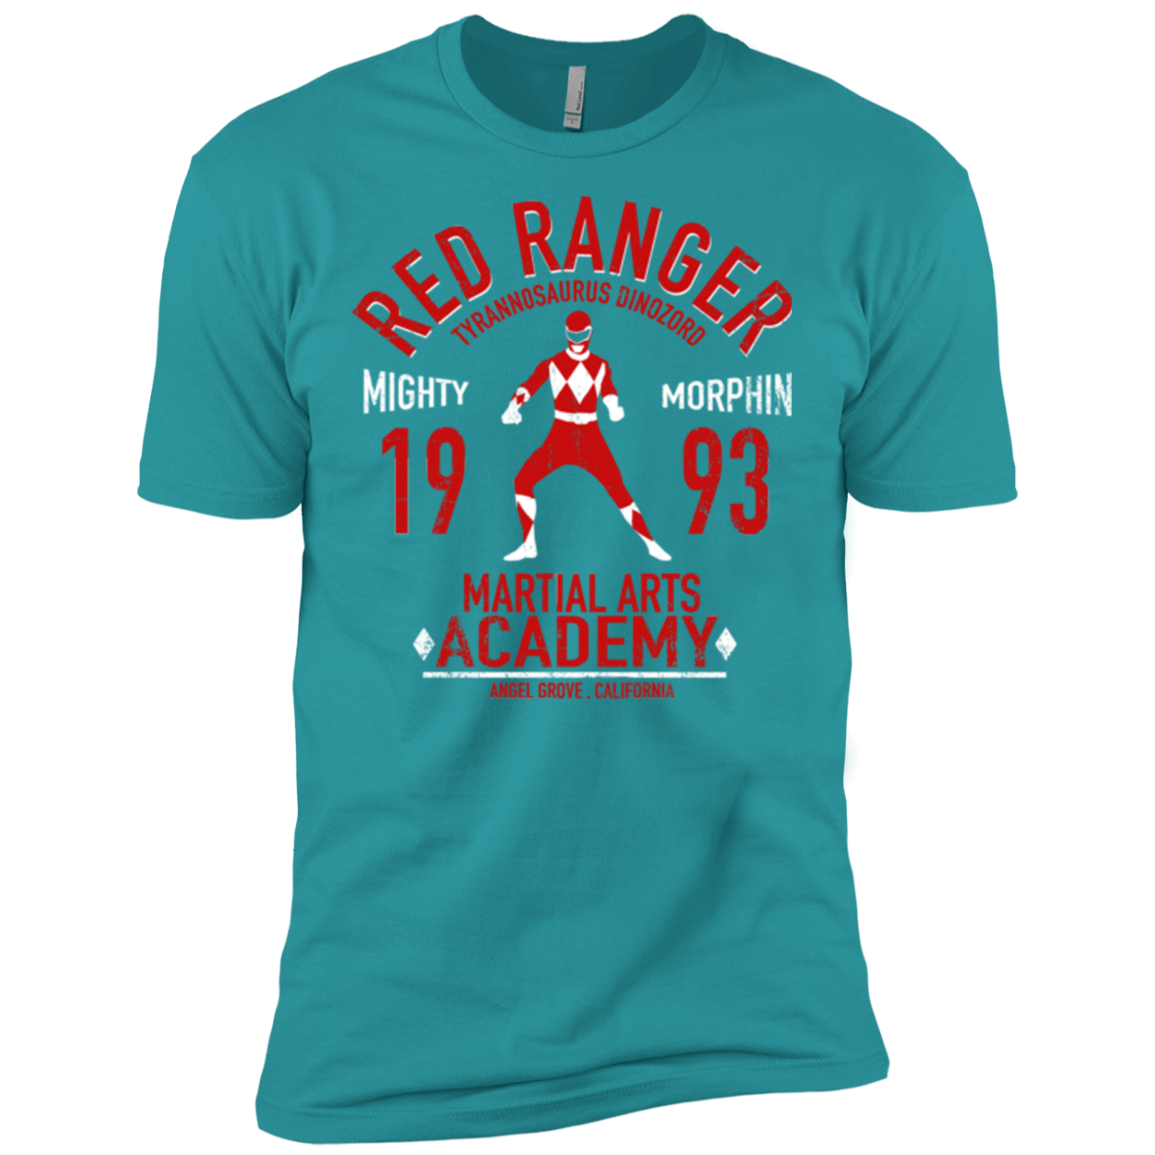 Tyrannosaurus Ranger (1) Men's Premium T-Shirt